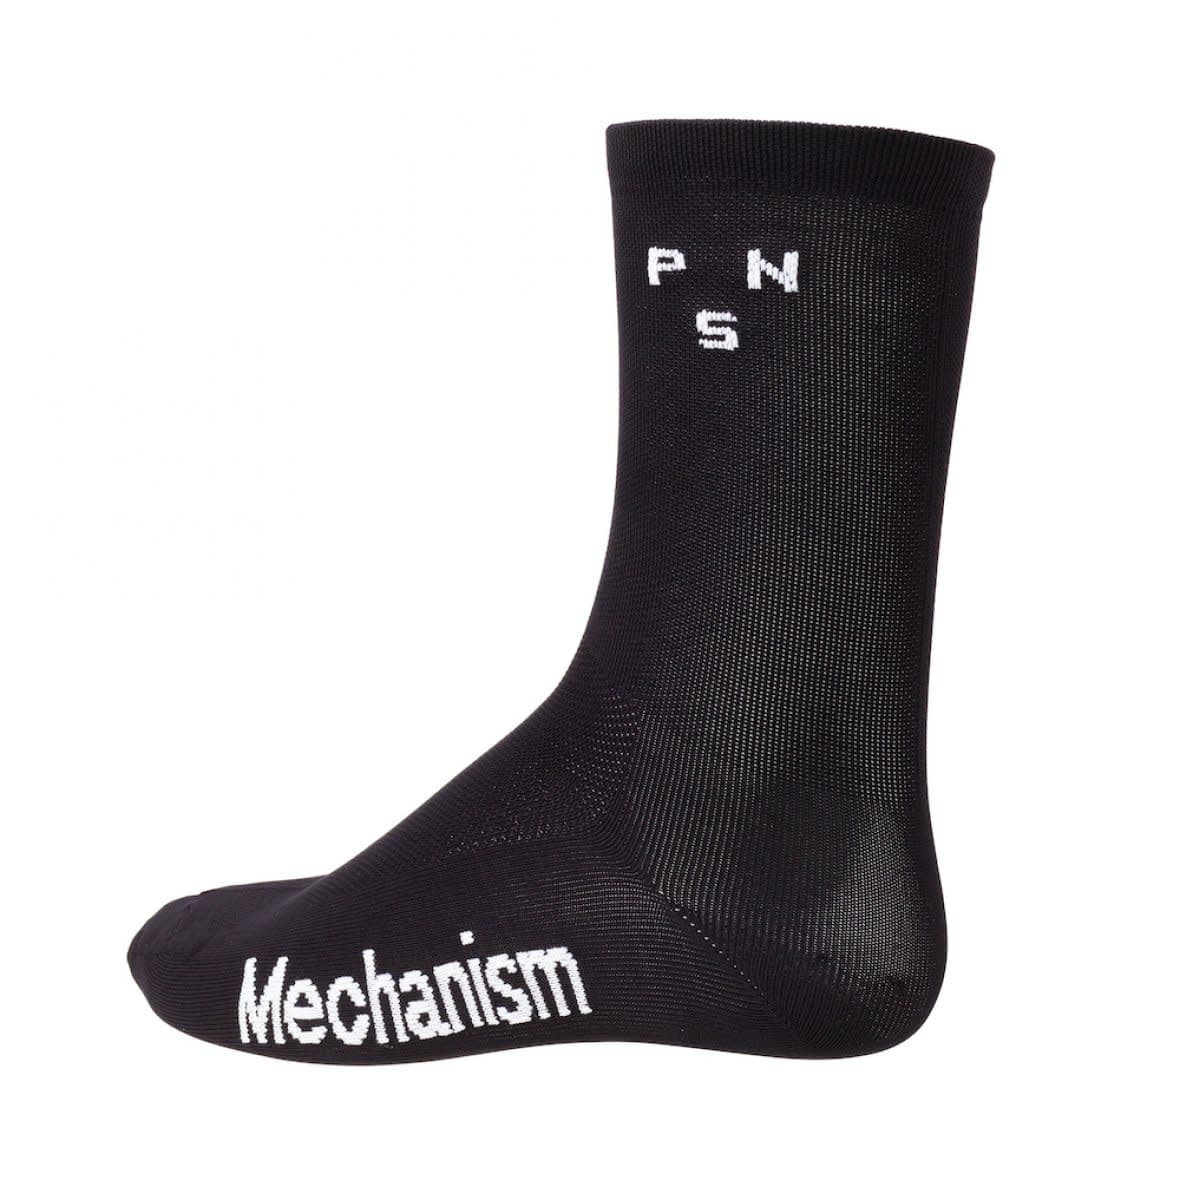 PAS NORMAL STUDIOS Mechanism Socks - Black